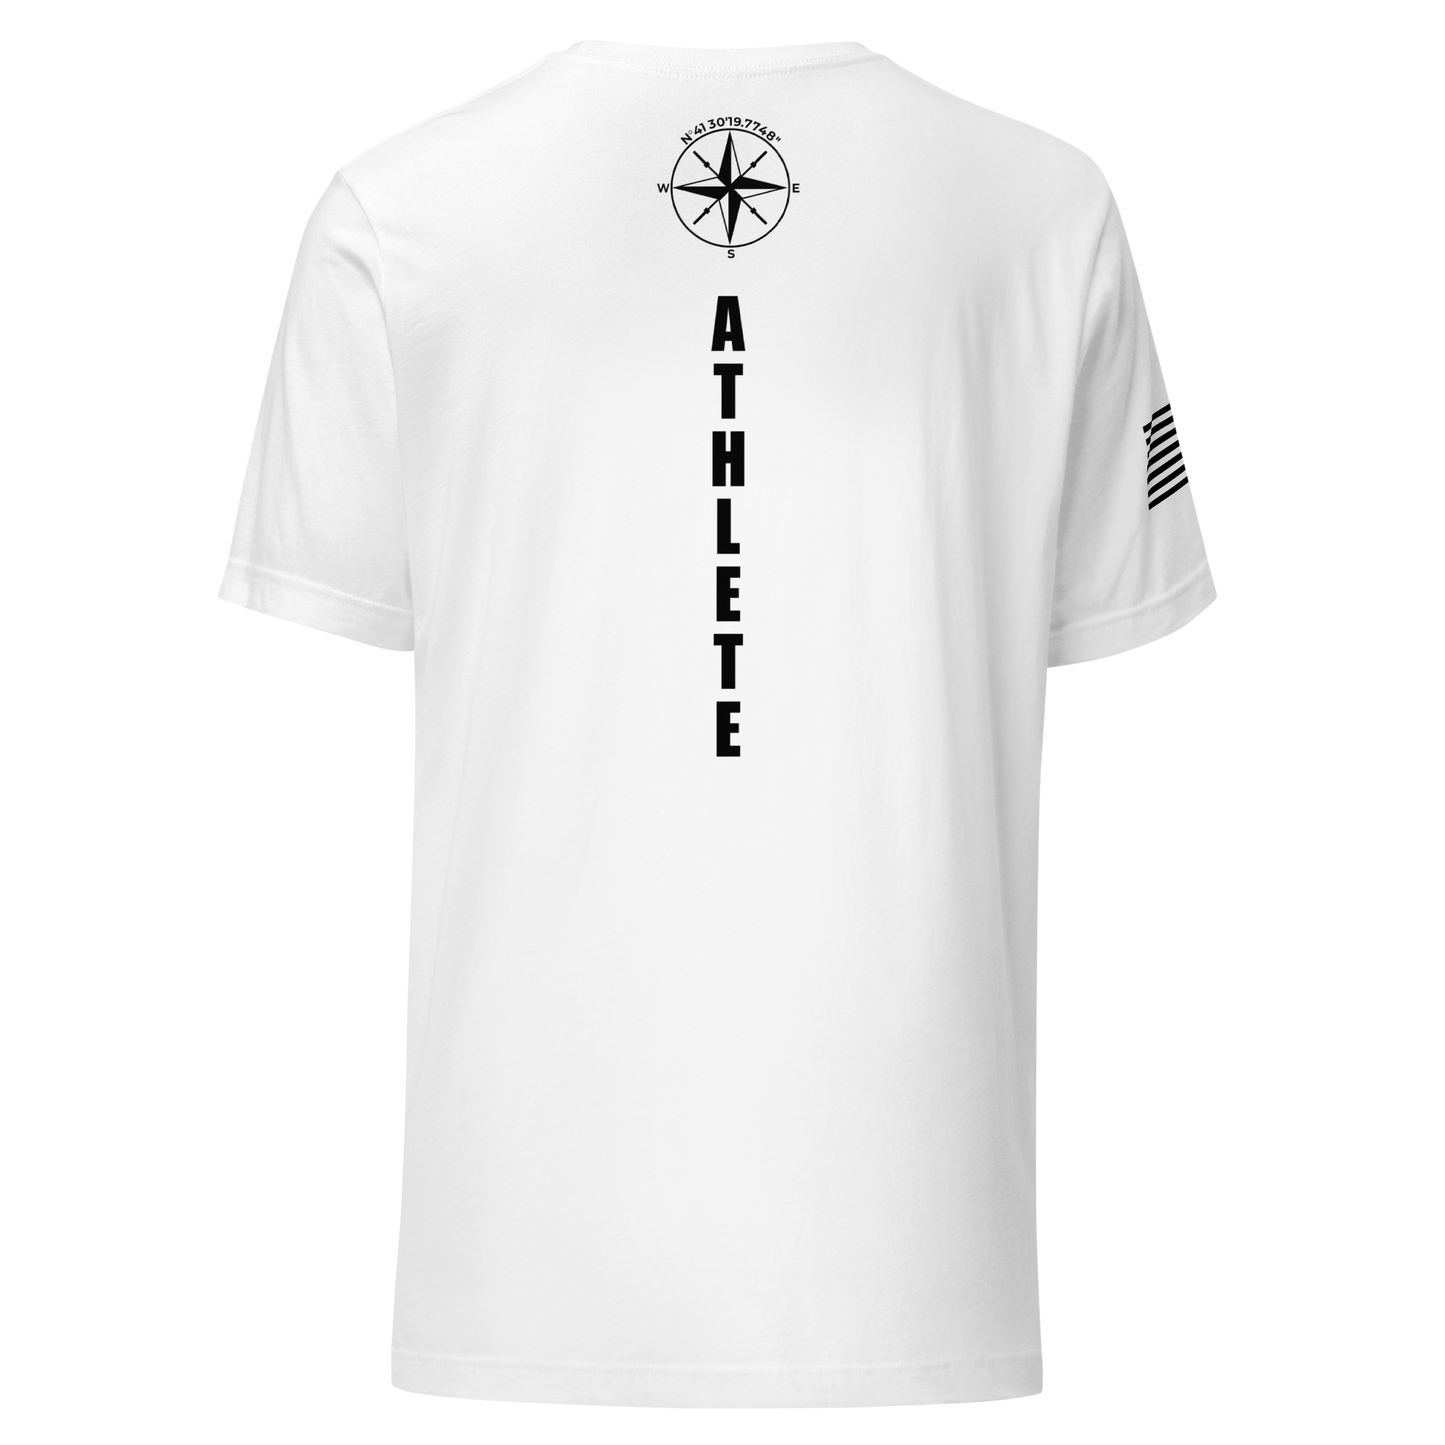 North 41 CrossFit Unisex shirt